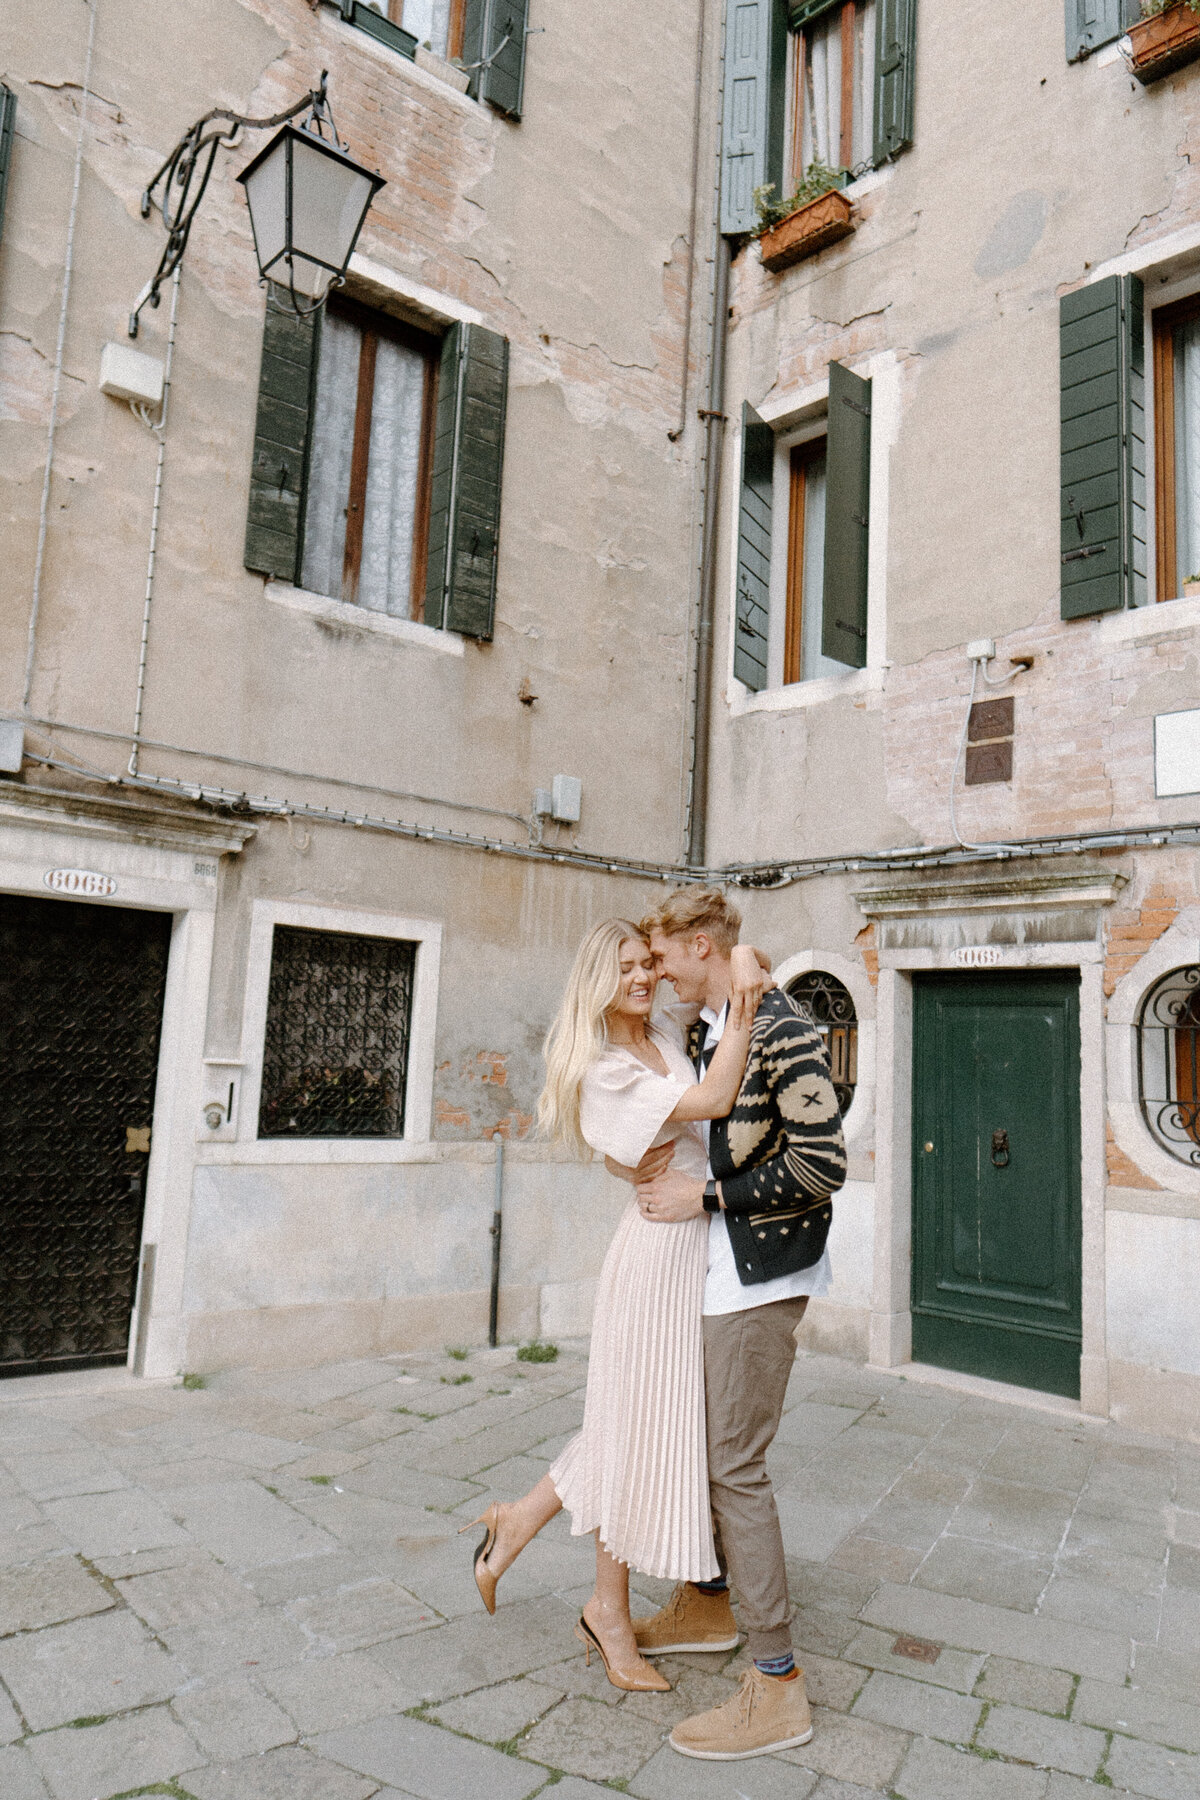 Documentary-Style-Editorial-Vogue-Italy-Destination-Wedding-Leah-Gunn-Photography-22